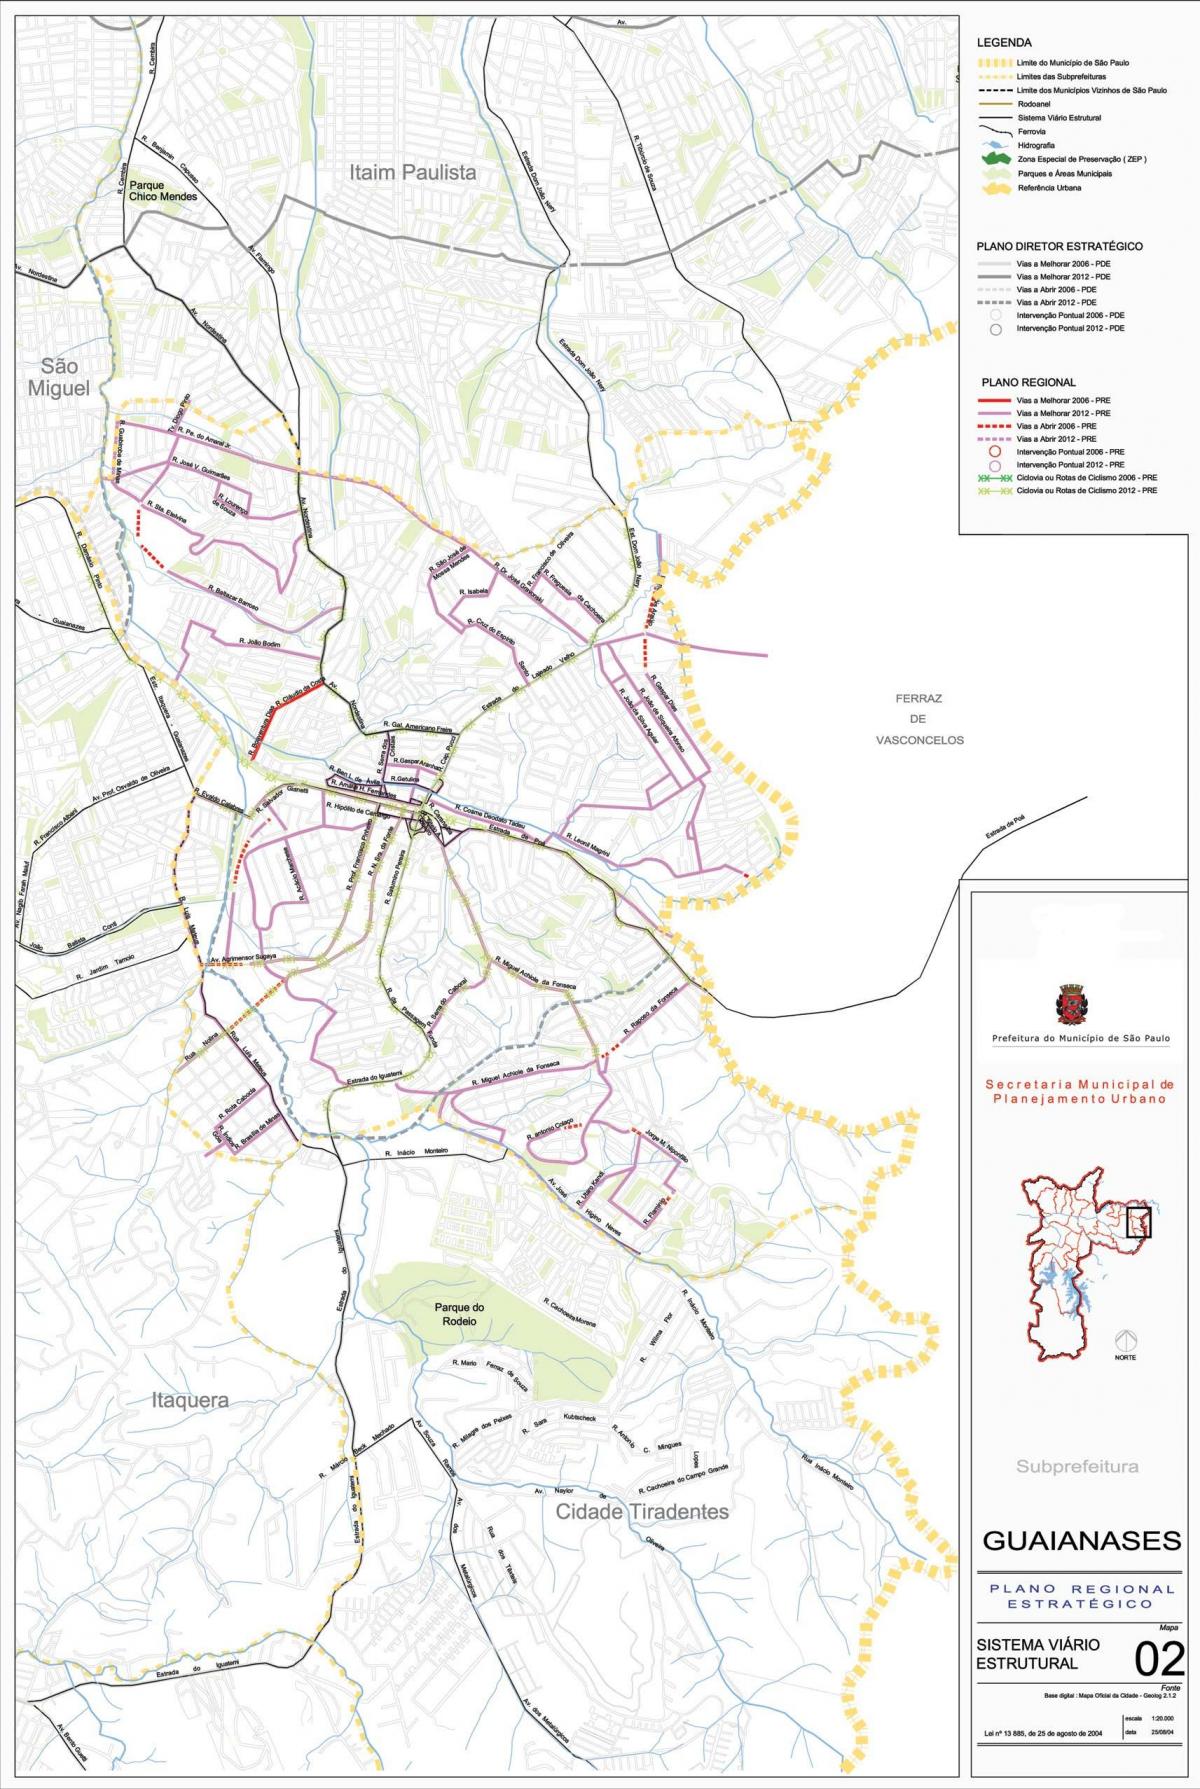 Map of Guaianases São Paulo - Roads